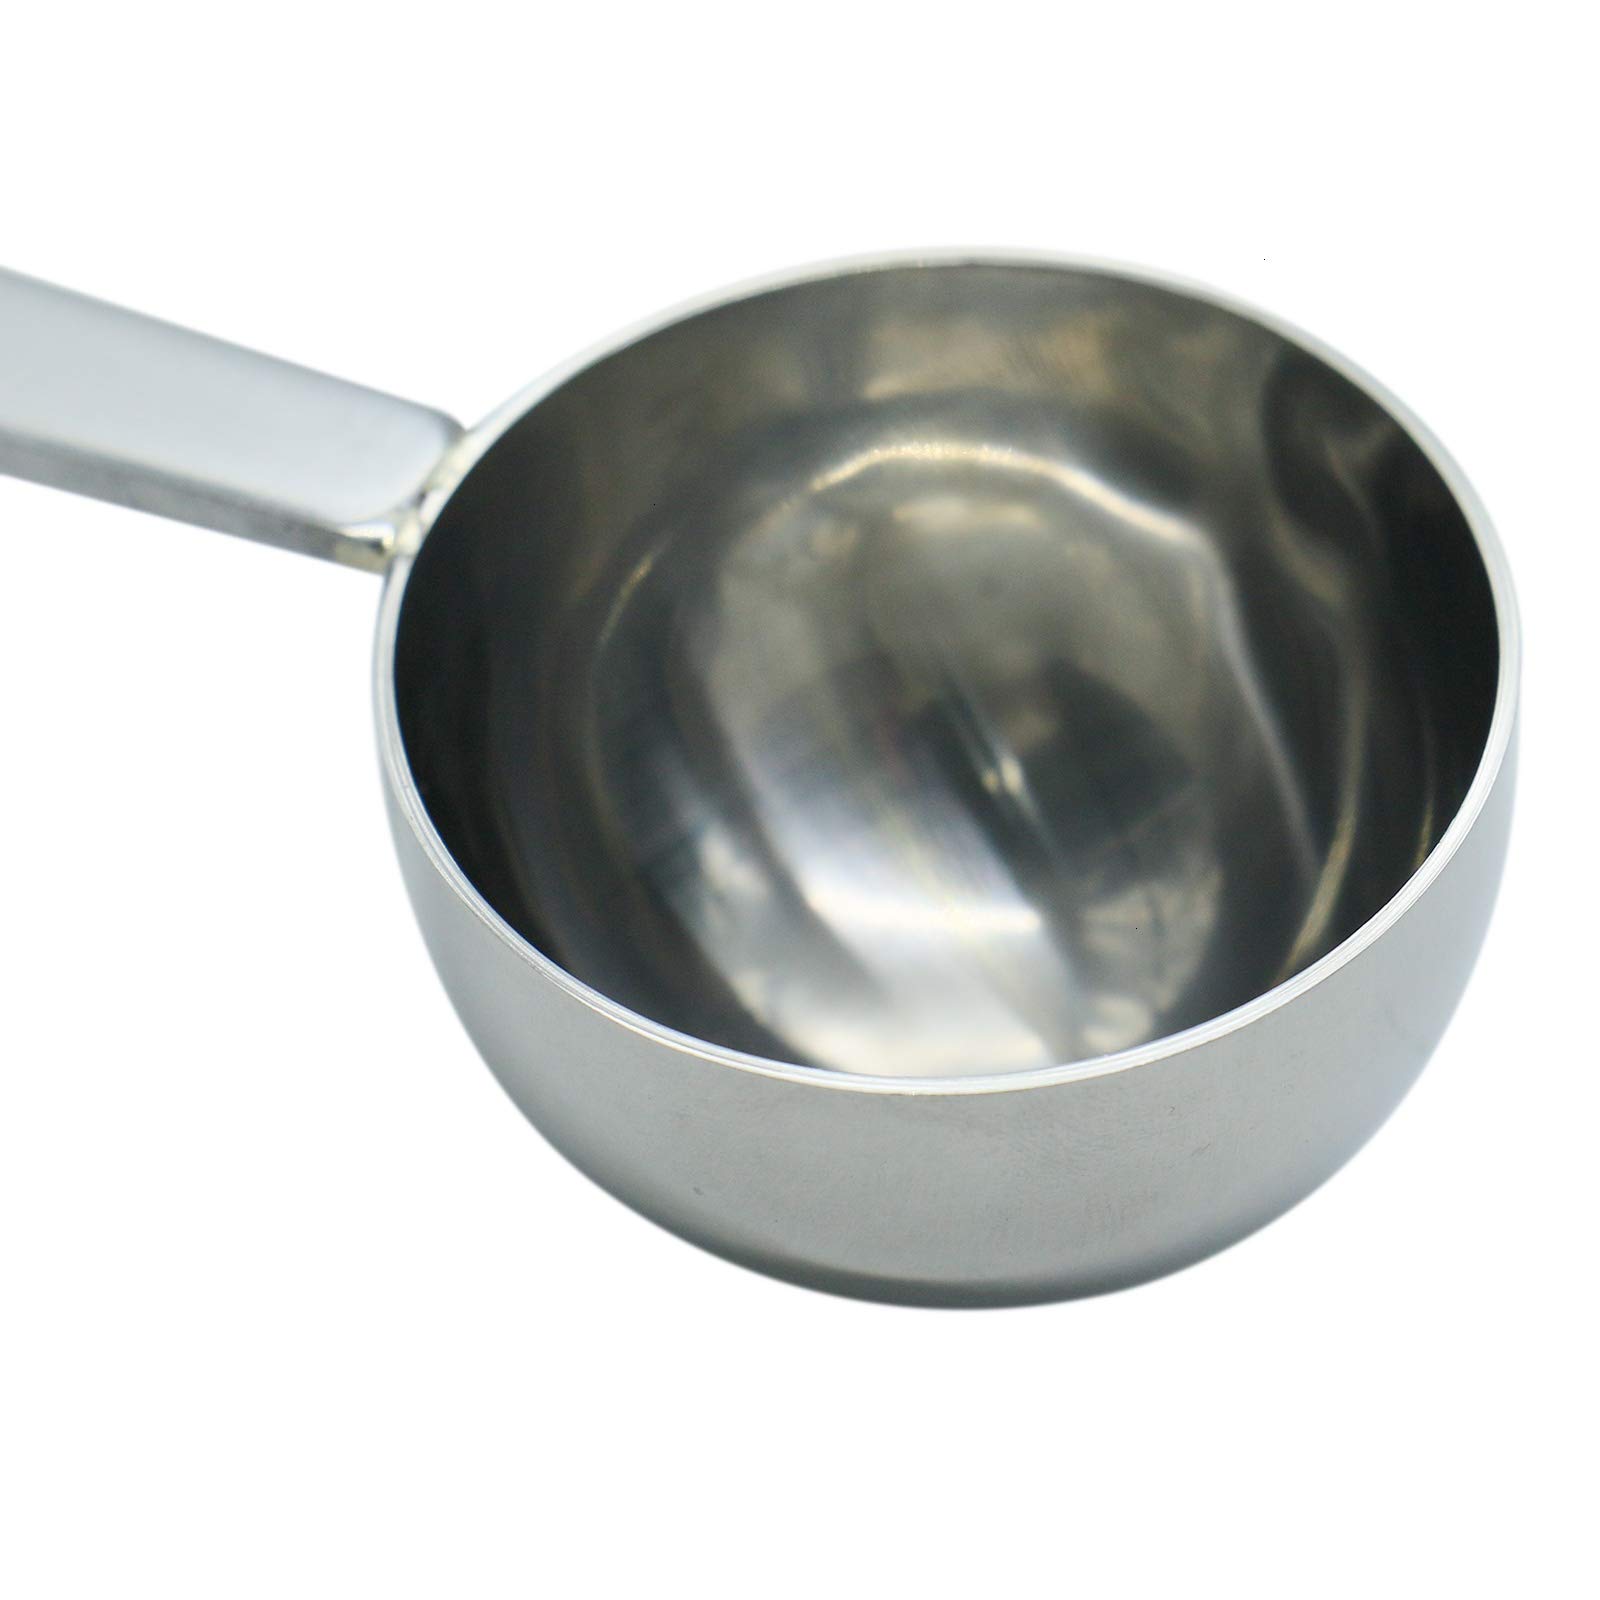 Timoo Coffee Measuring Scoop 1 Tablespoon long handle Stainless Steel spoon for Coffee, Milk Powder, Fruit Powder, Set of 5